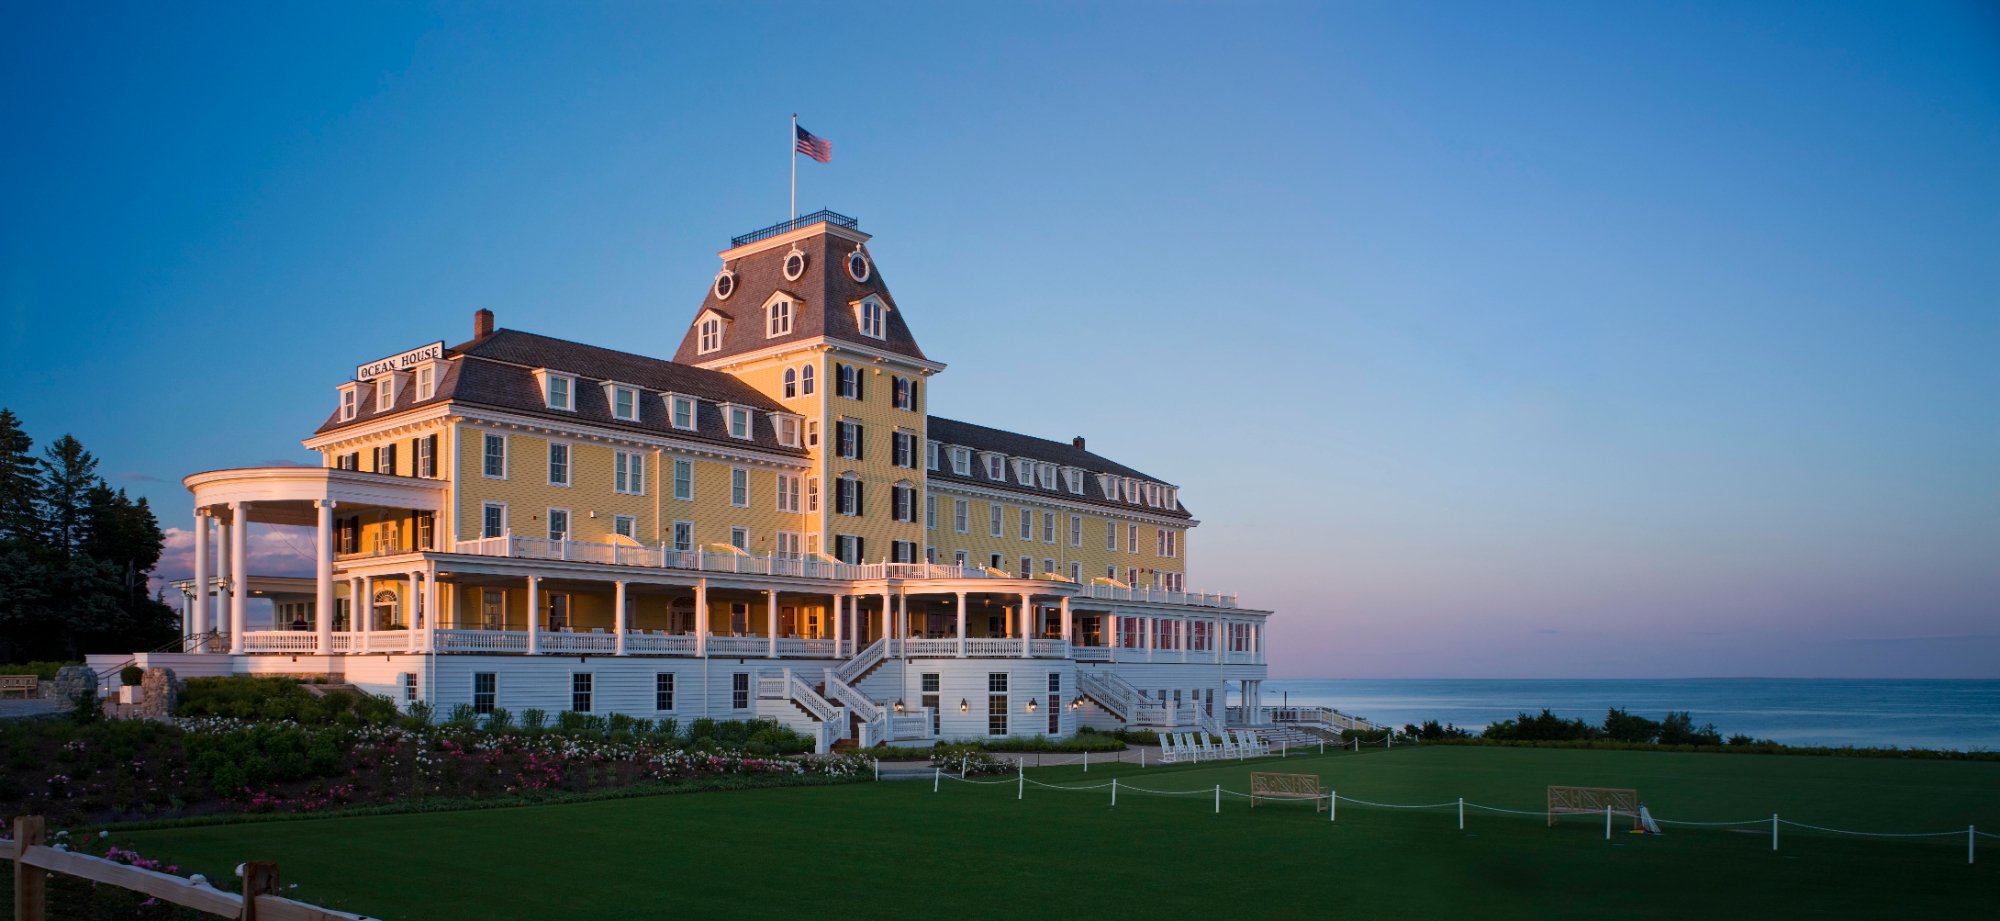 10 Classic New England Hotes and Resorts para otoño - 13